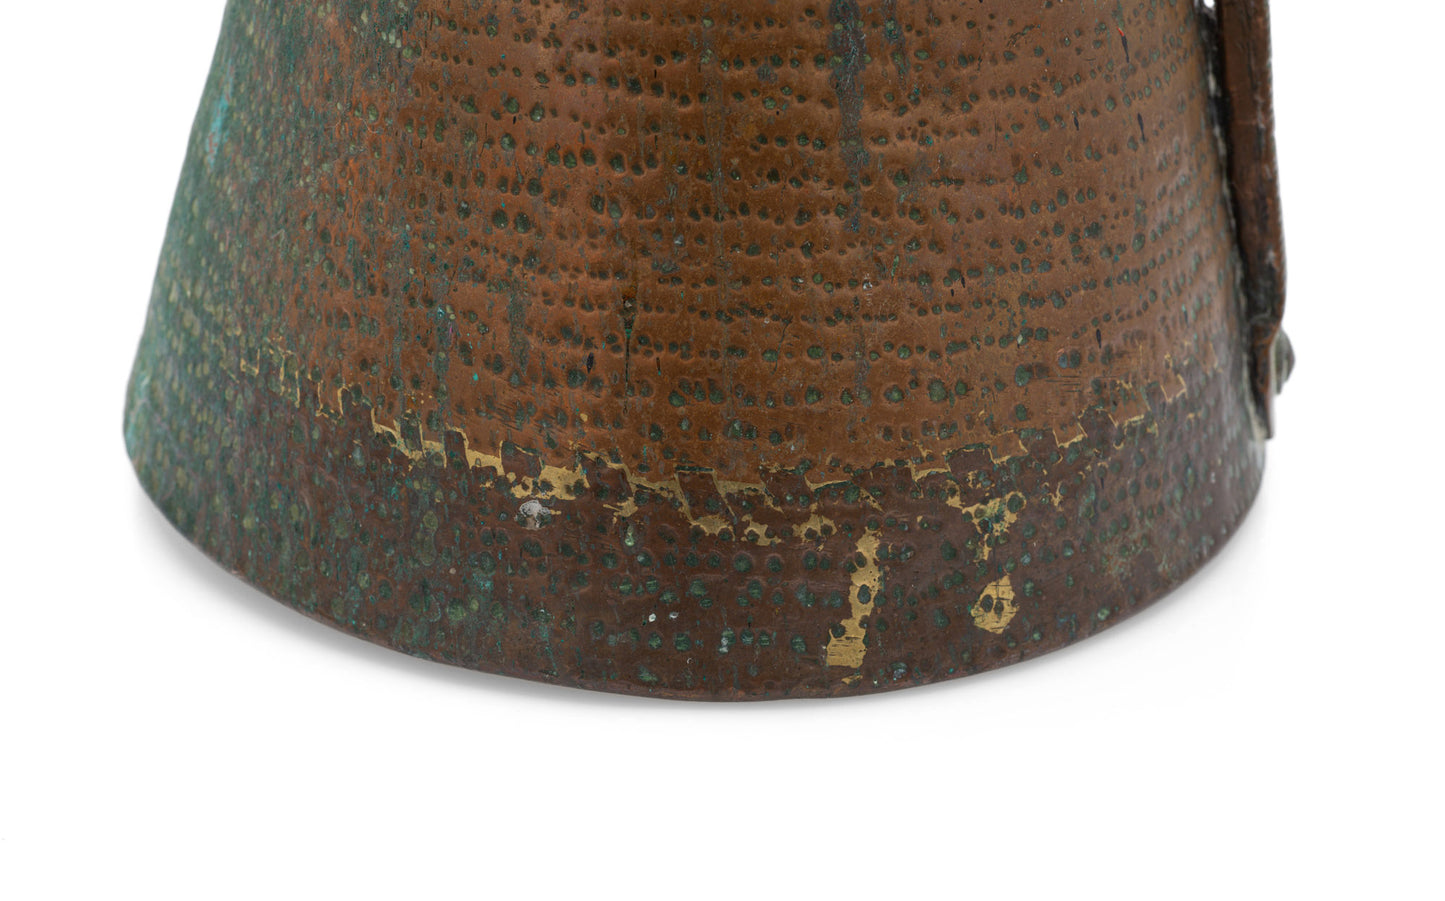 Antique Ottoman Turkish Large Copper Water Storage Jug Artisan Hand Made (Code 2532)